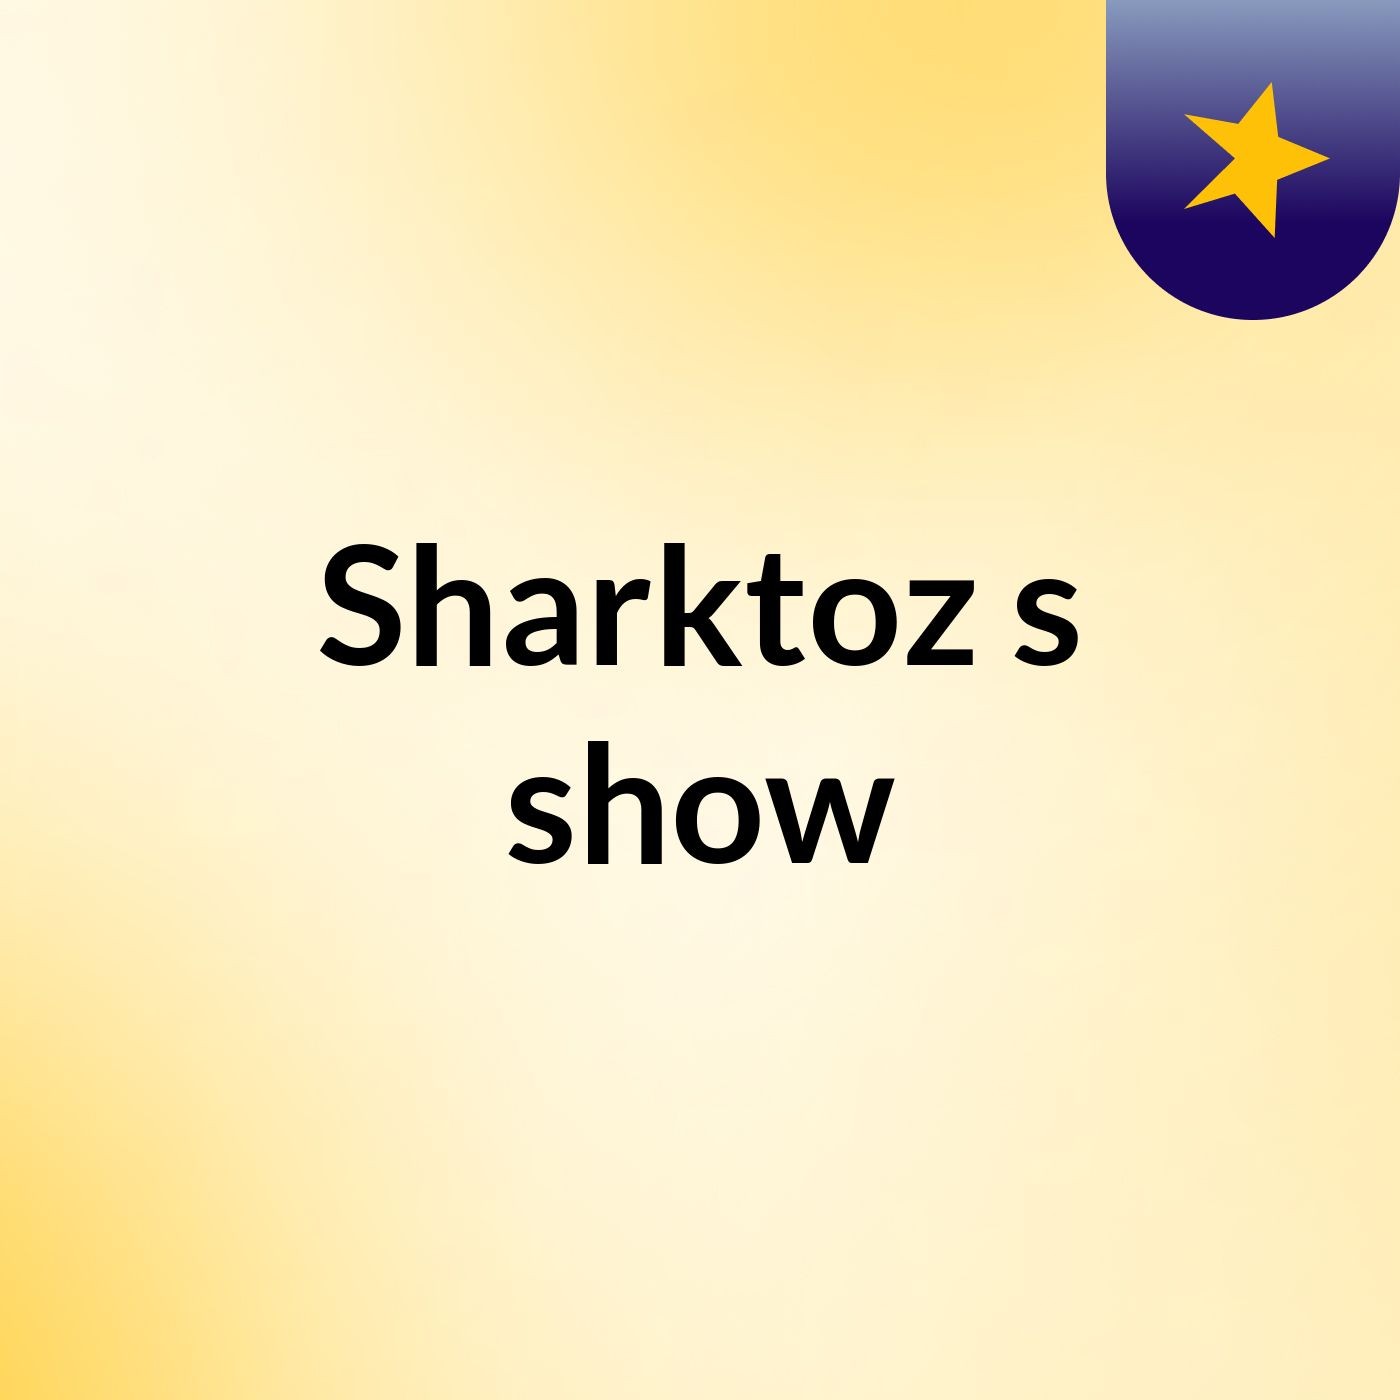 Sharktoz's show